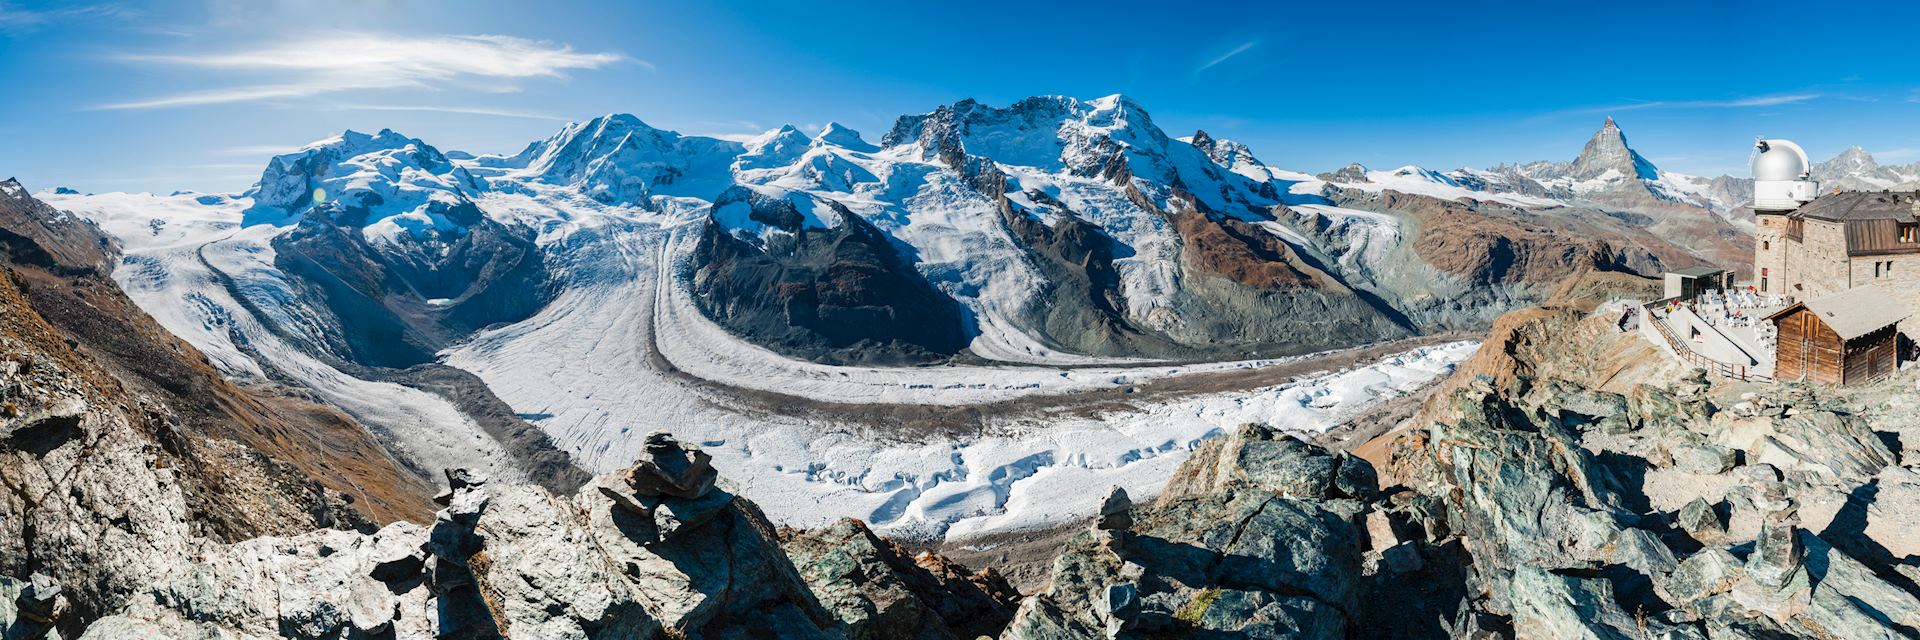 Gorner Glacier and Matterhorn